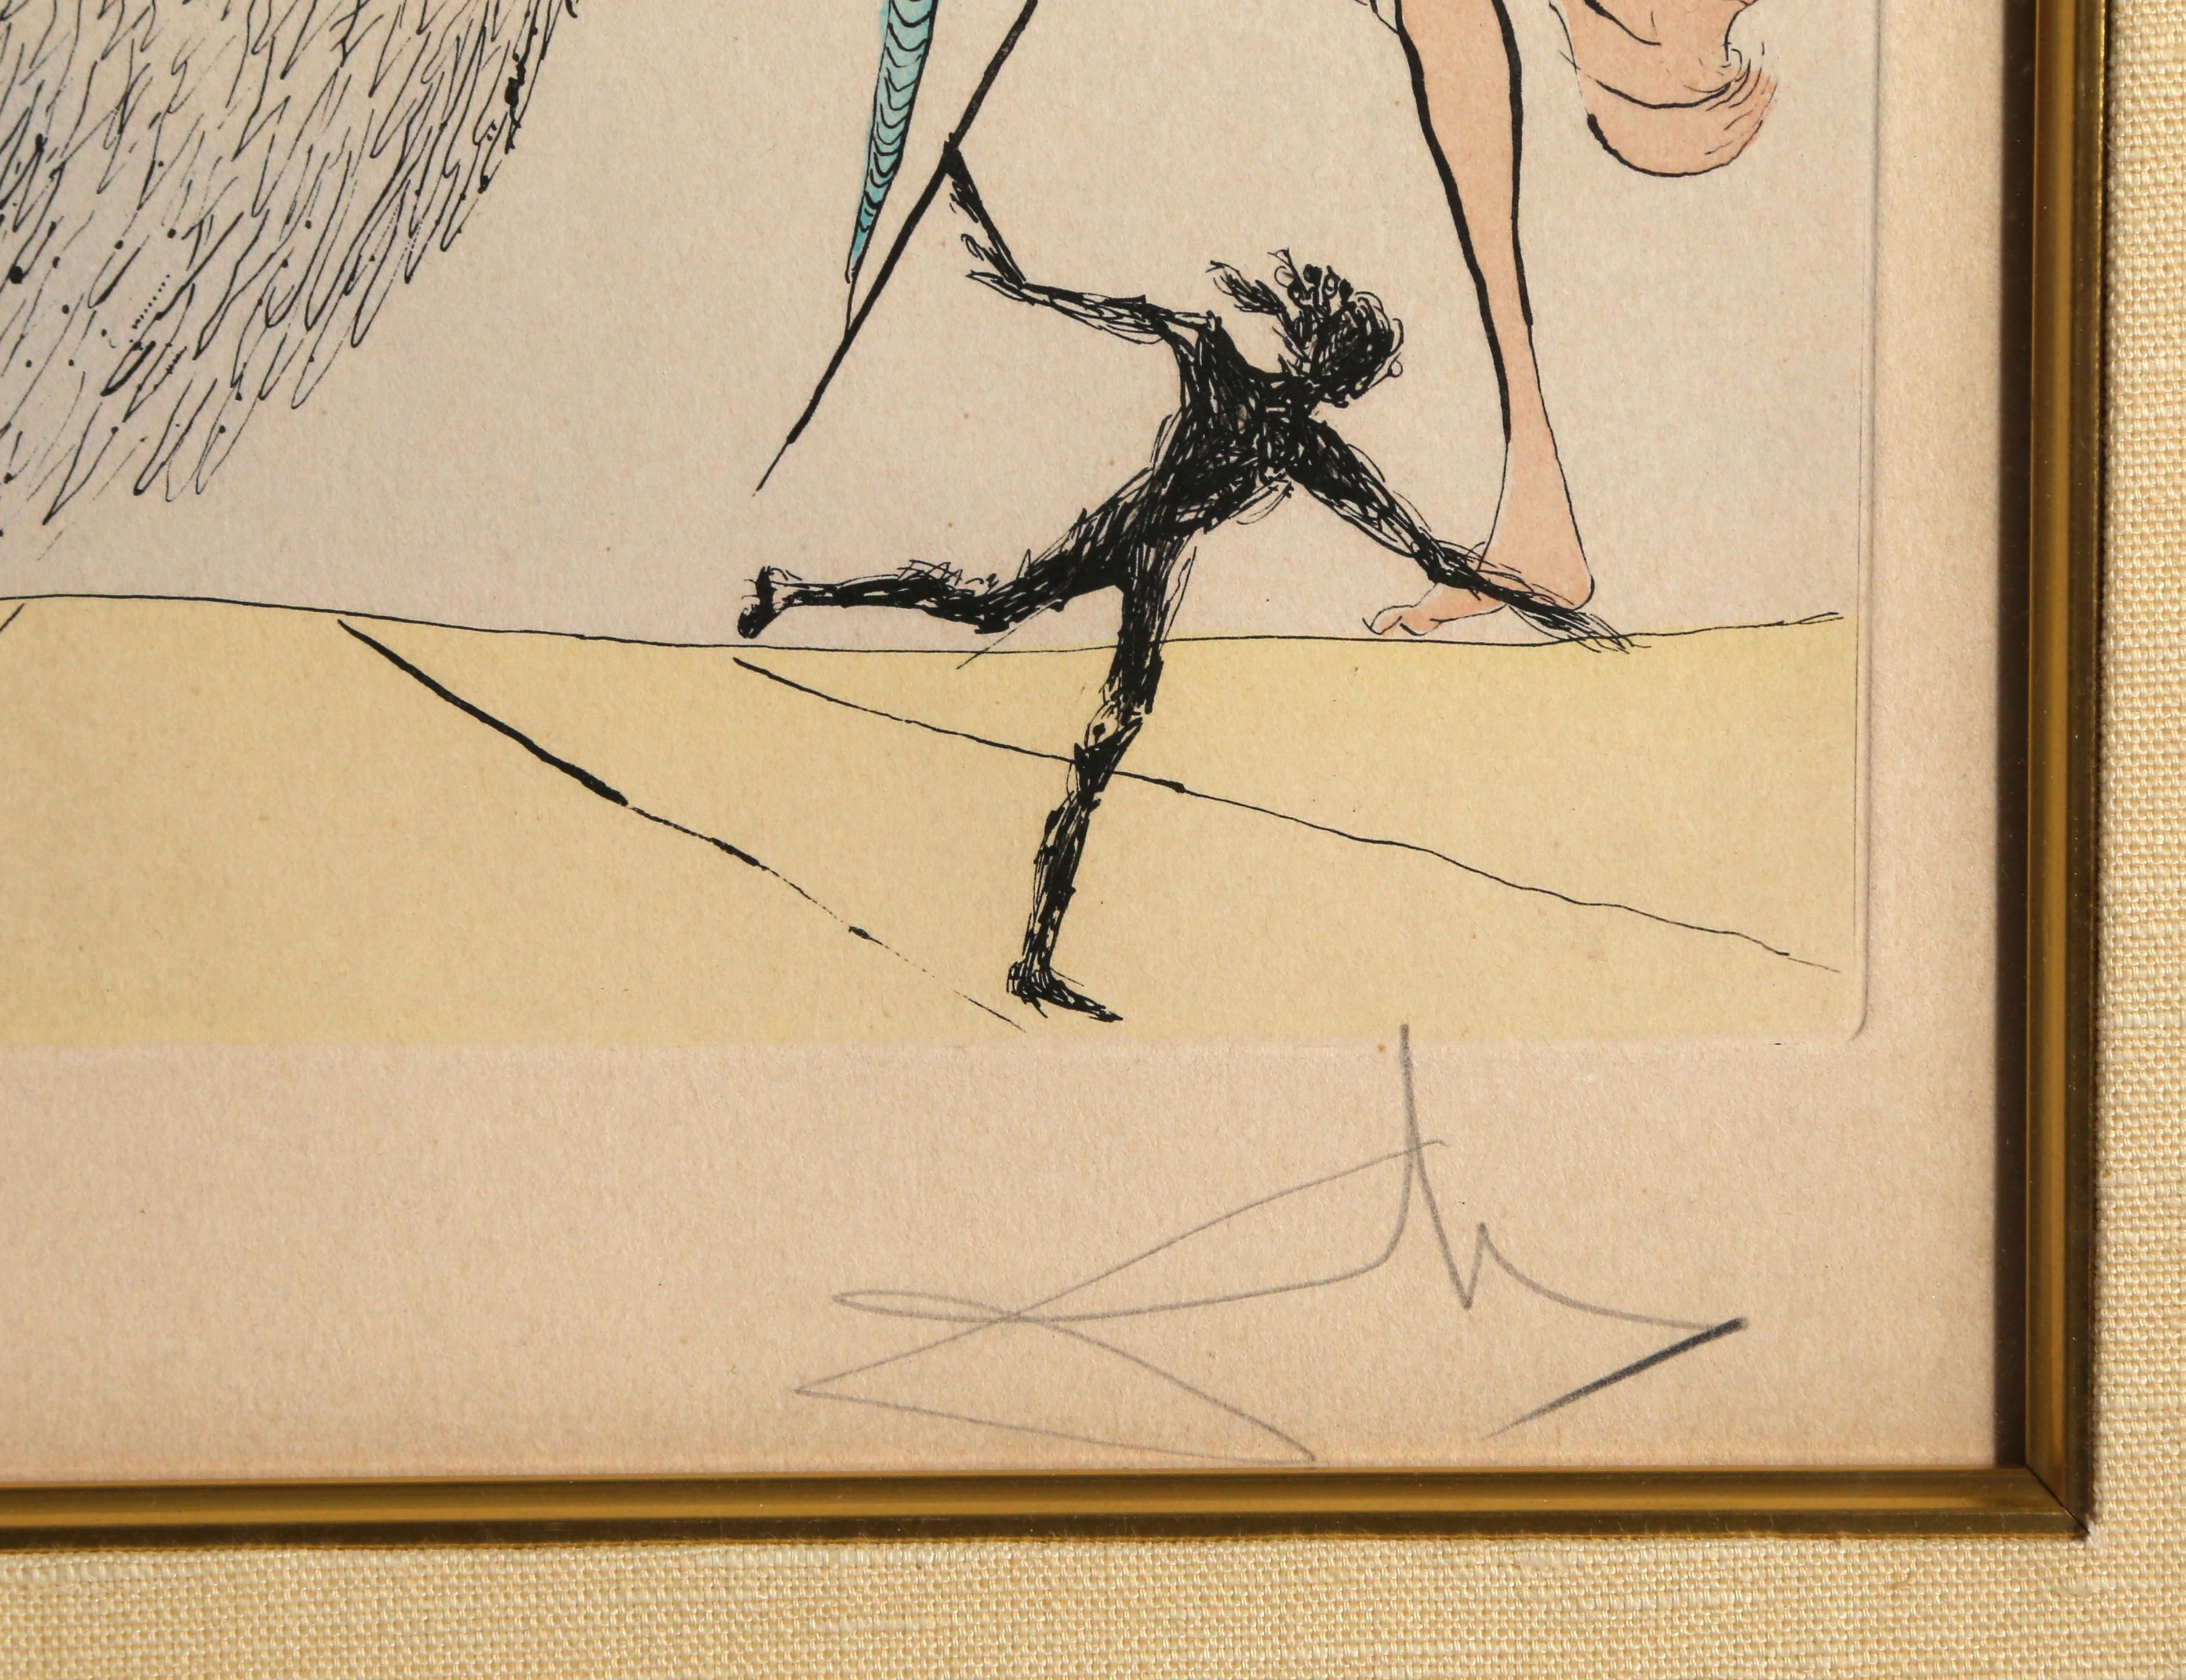 L'Ampoule Incandesence from Homage to Leonardo Da Vinci - Surrealist Print by Salvador Dalí